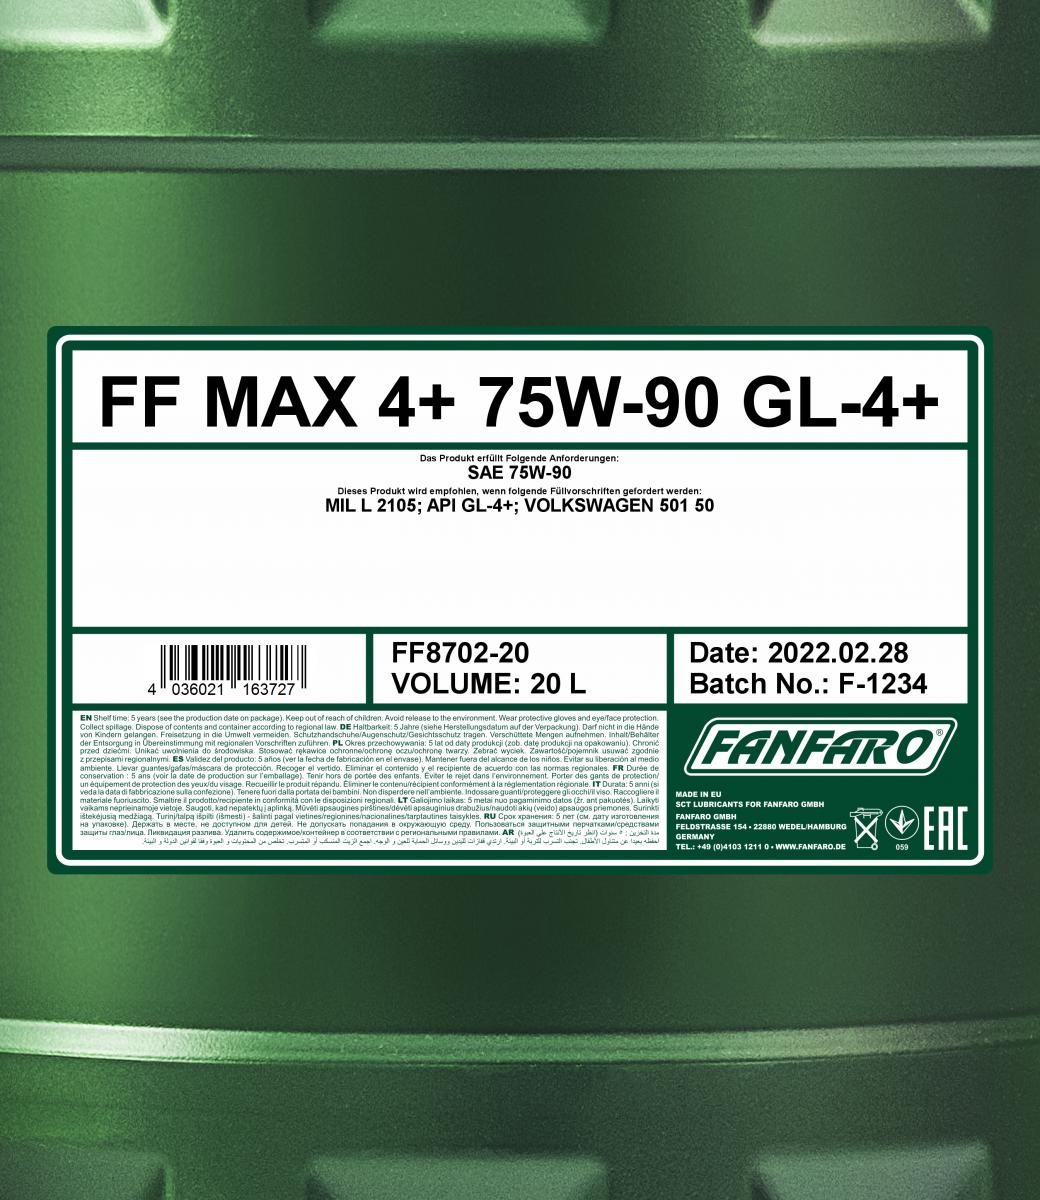 FANFARO Manual Transmission Oil FF8702-20